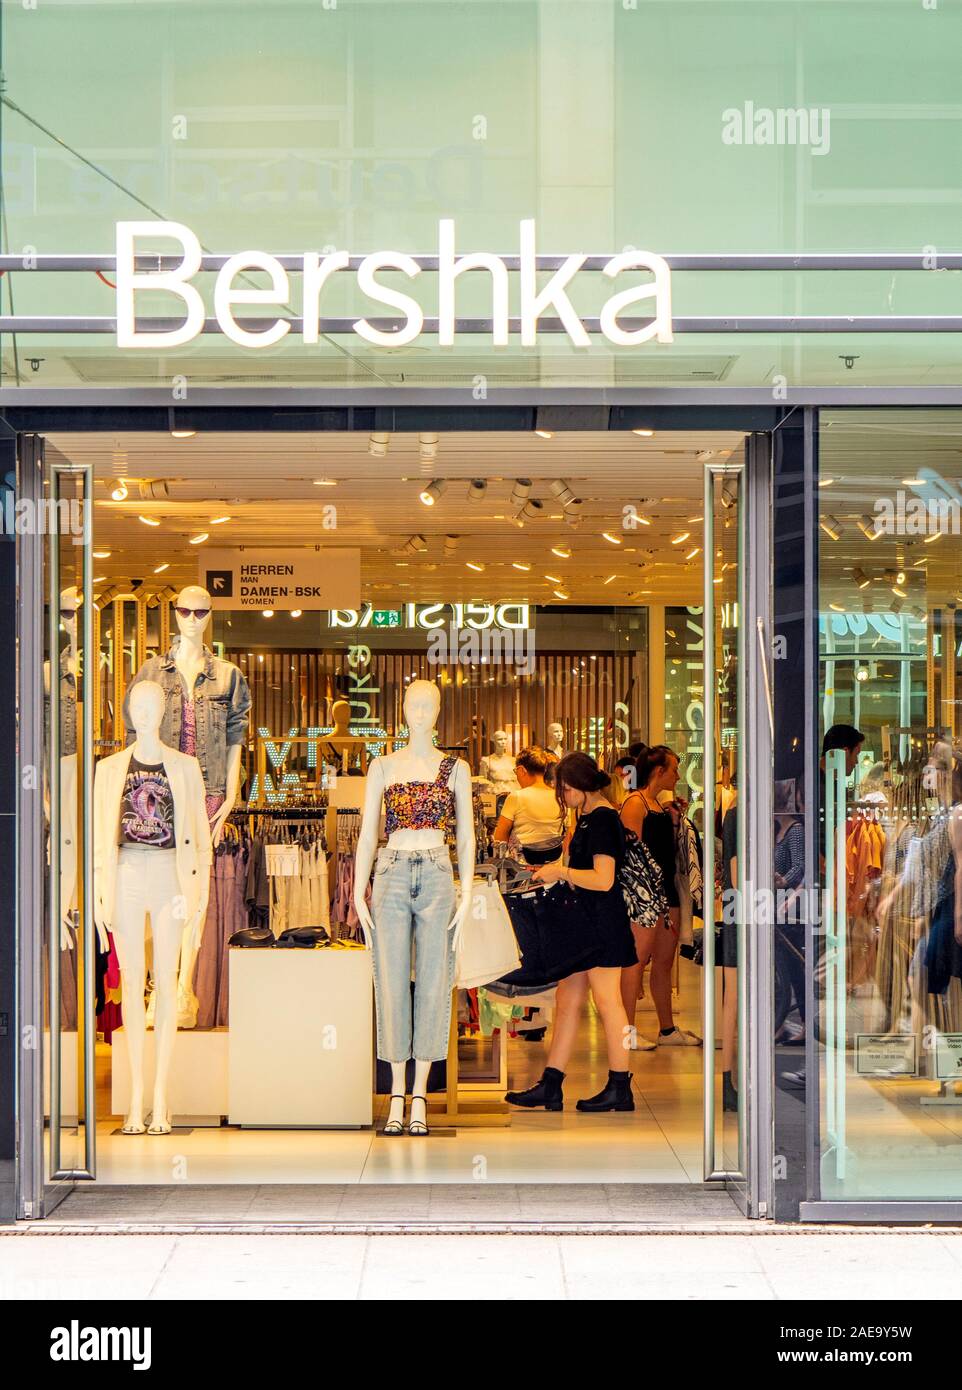 Bershka Retailer Banque d'image et photos - Alamy